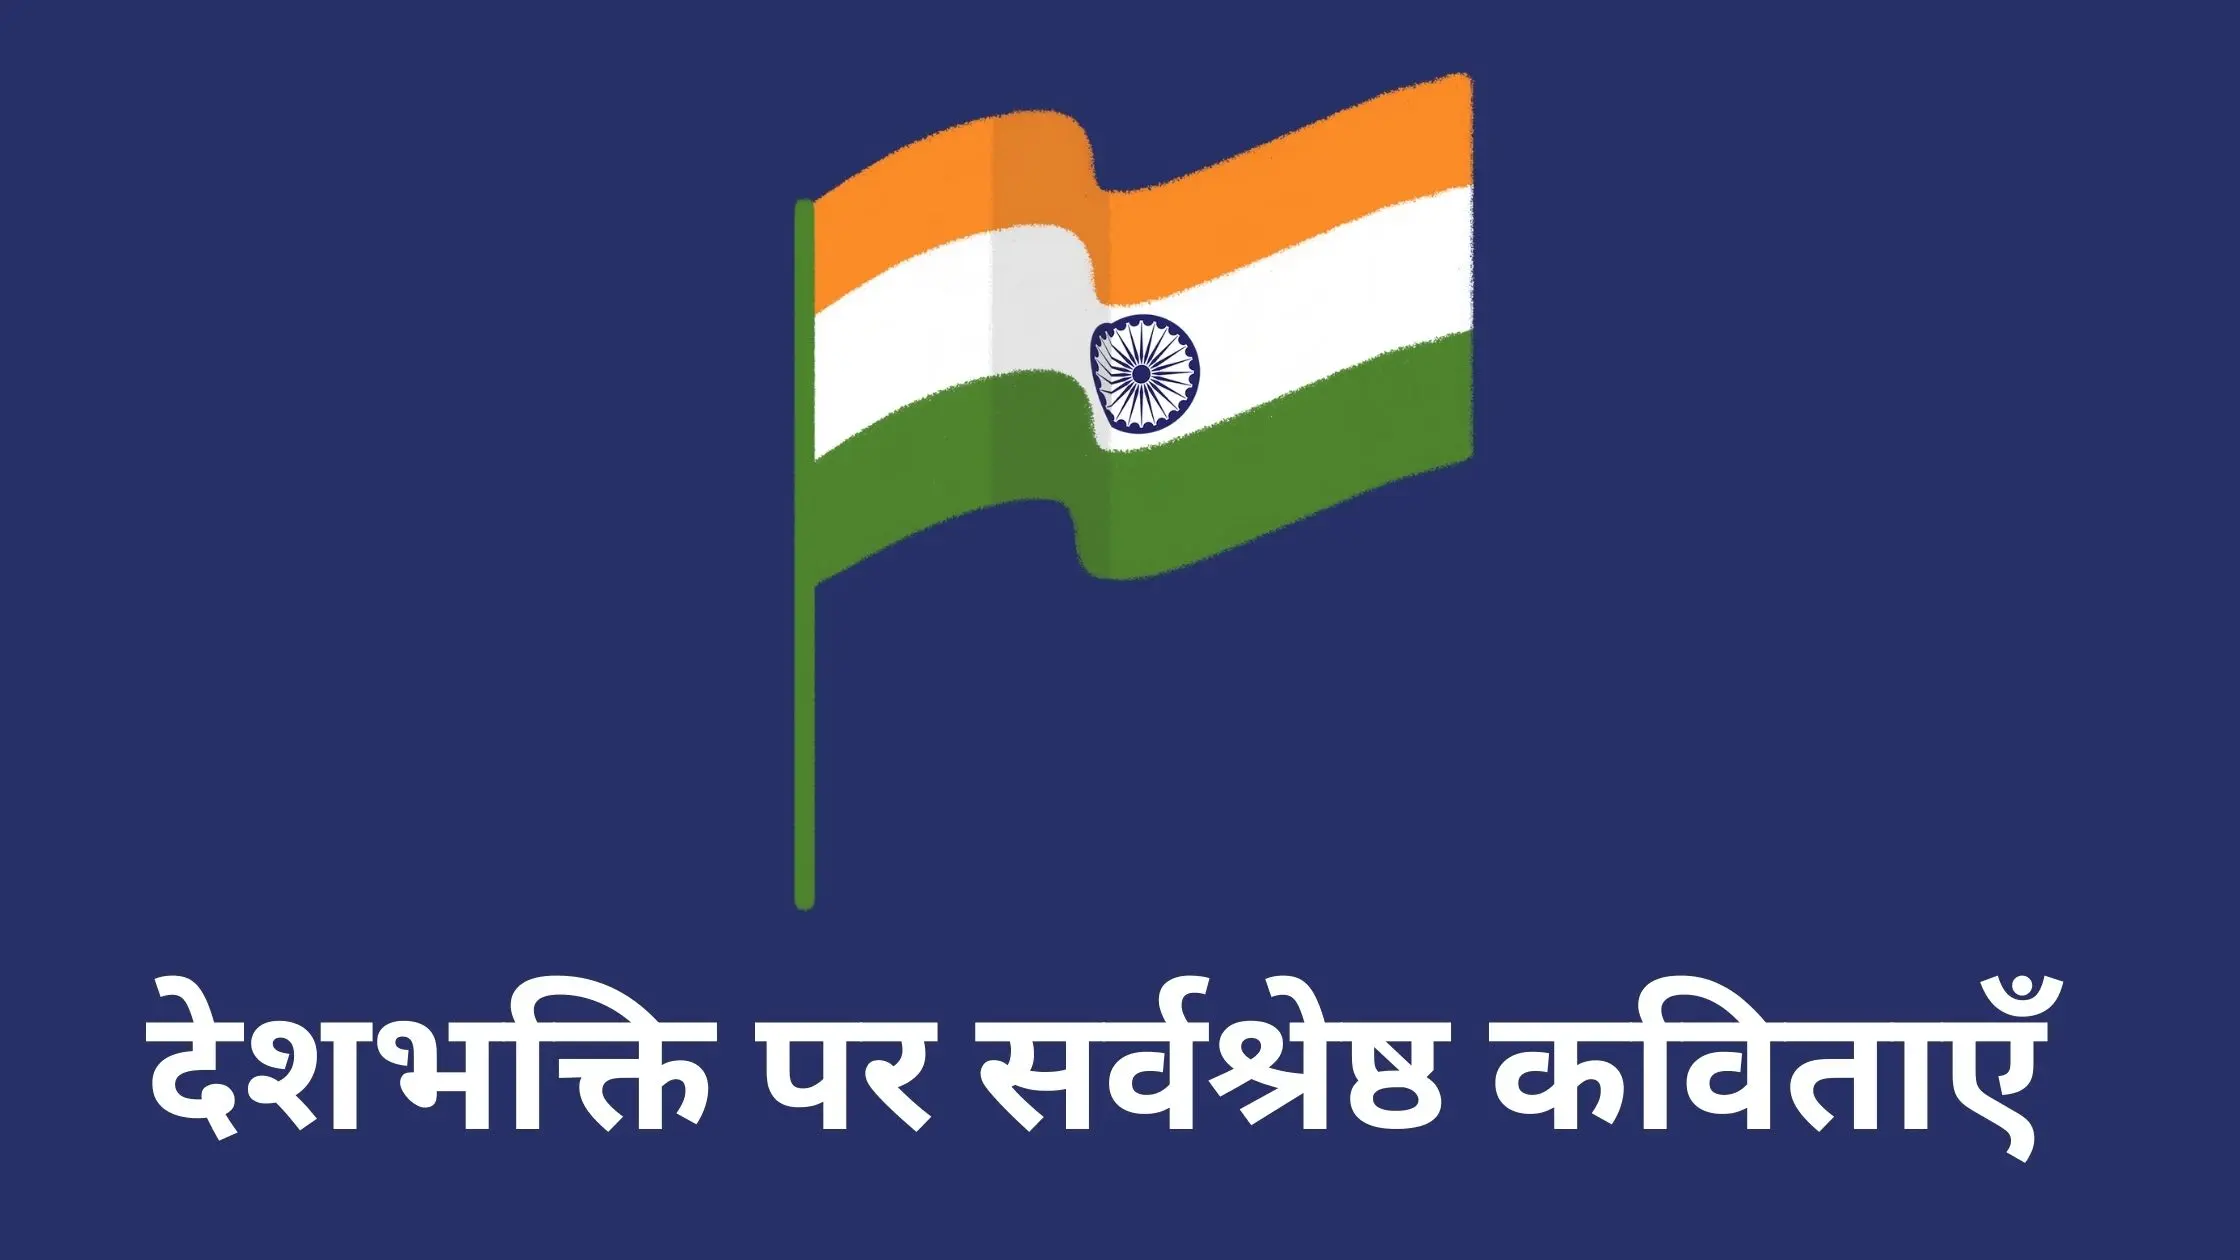 Patriotic Poem in Hindi